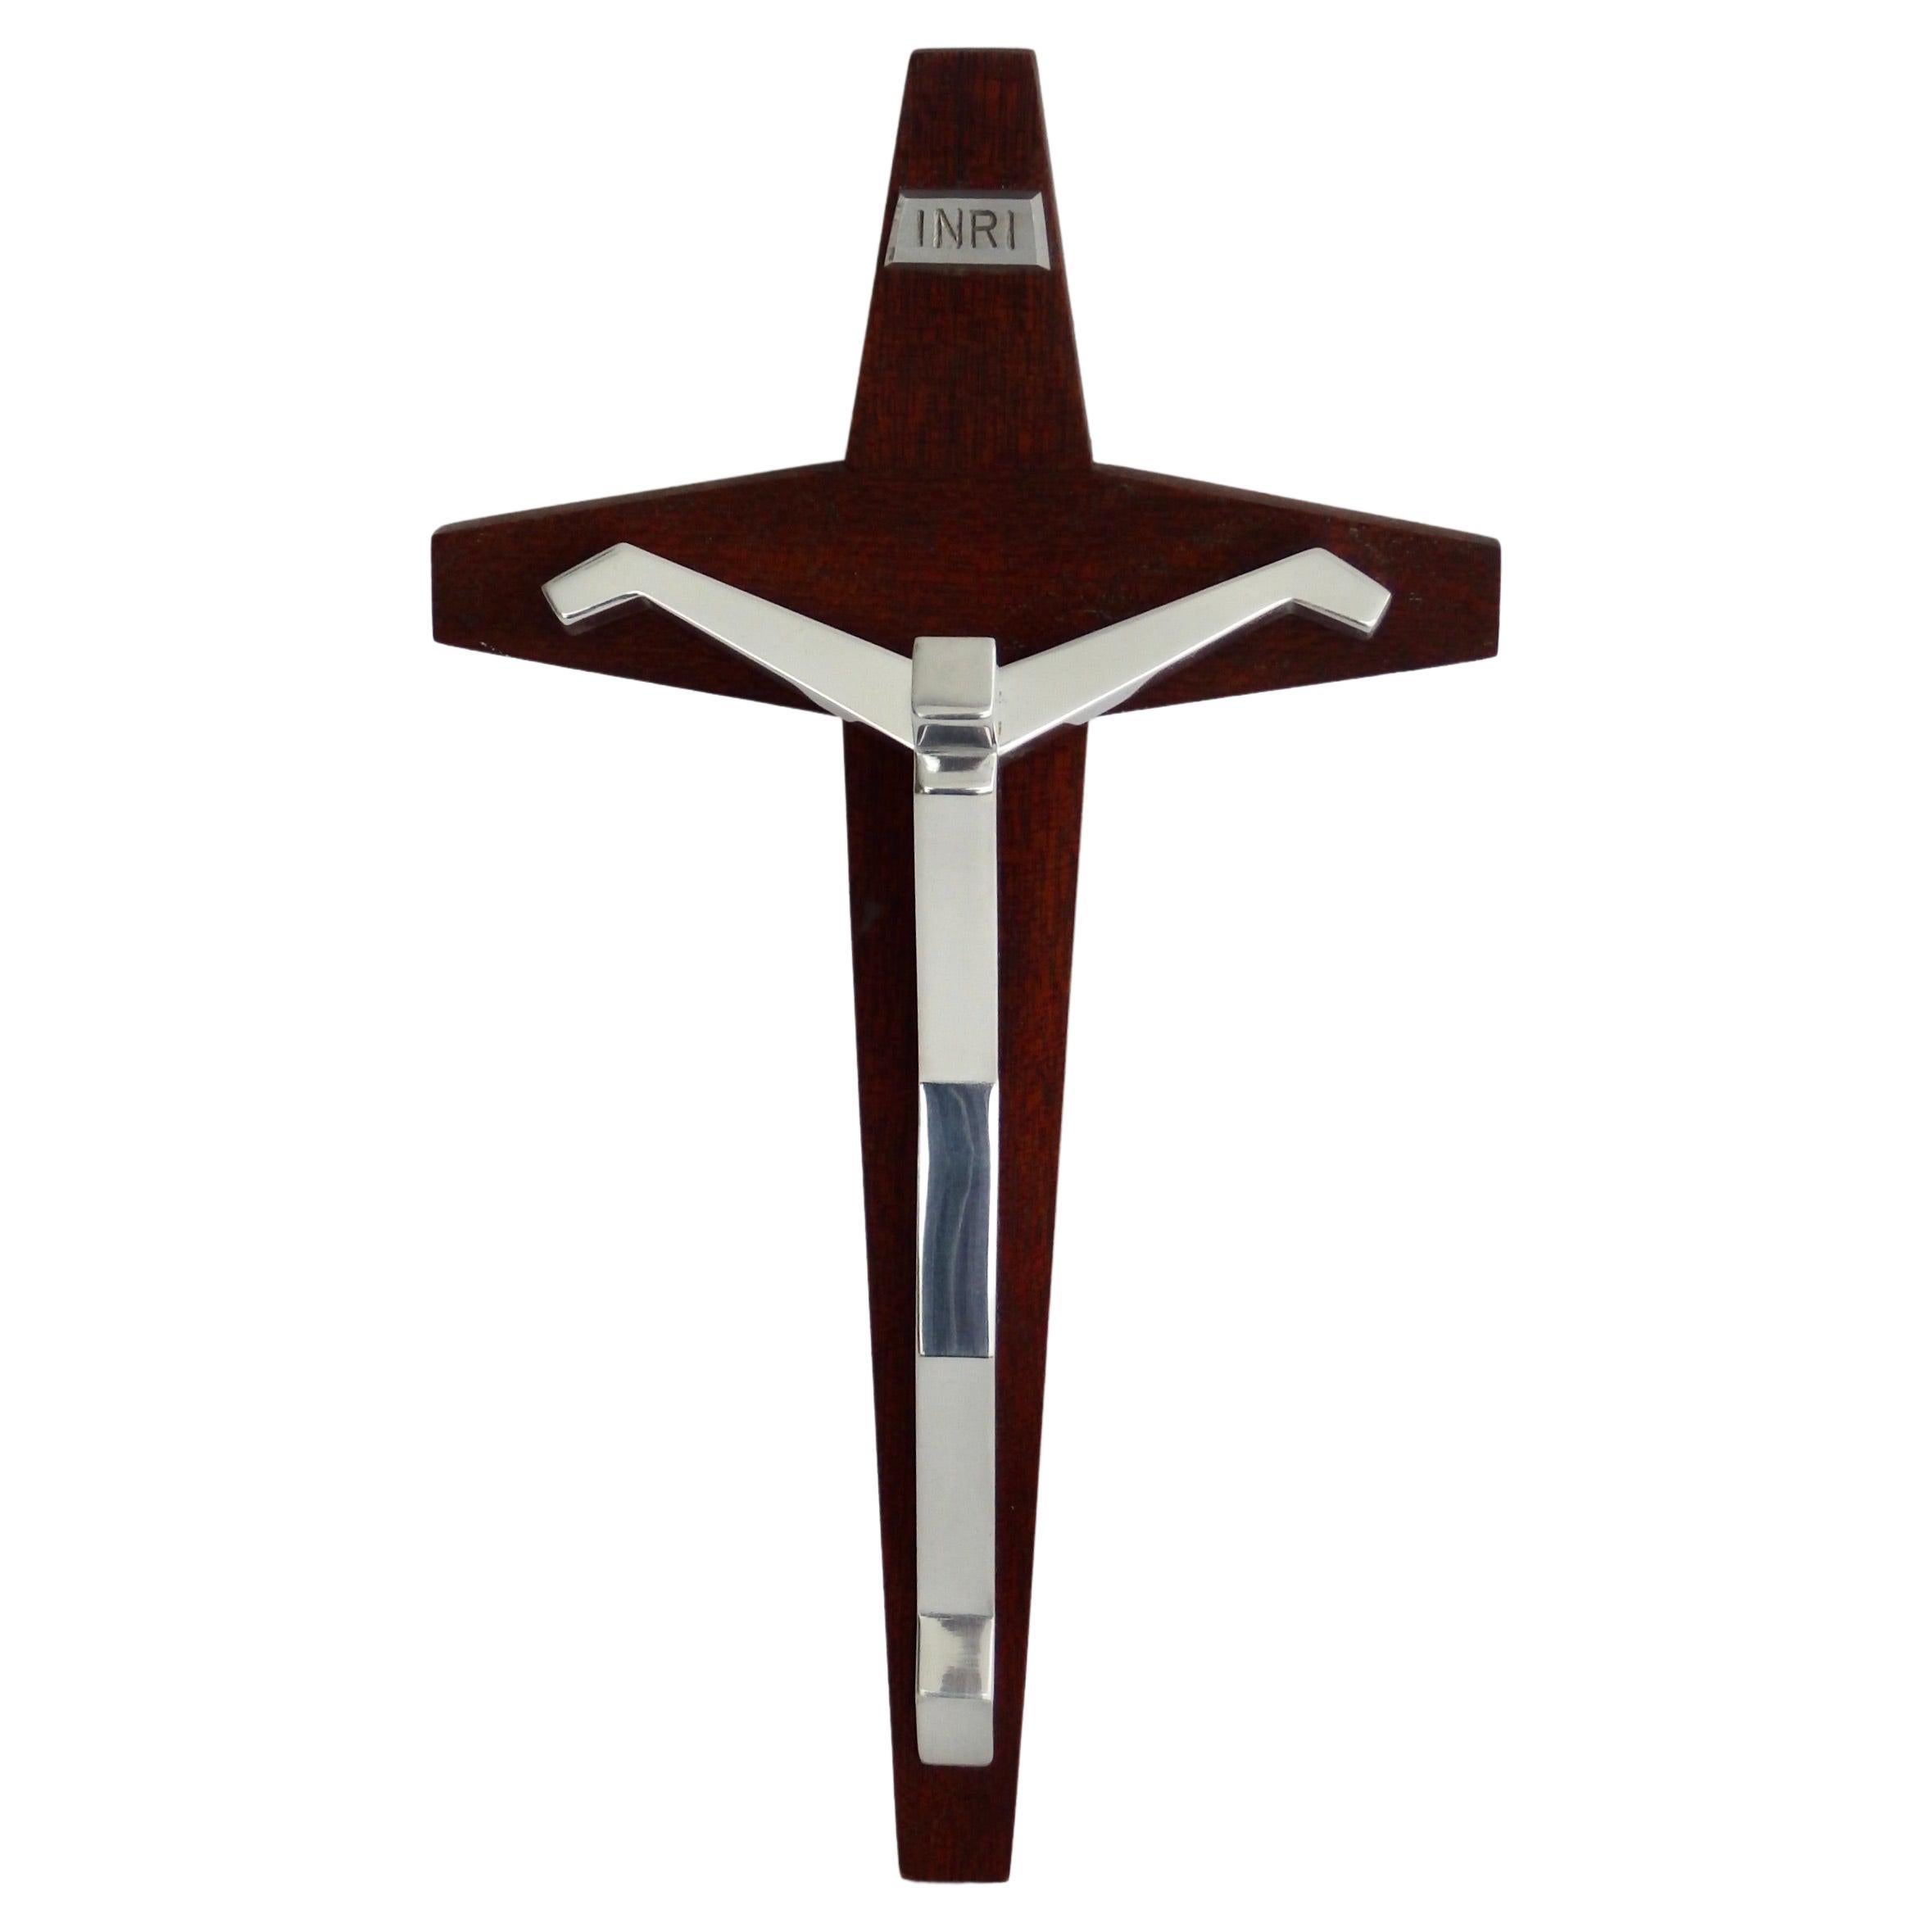 Modernist polished Aluminum and Mahogany Crucifix